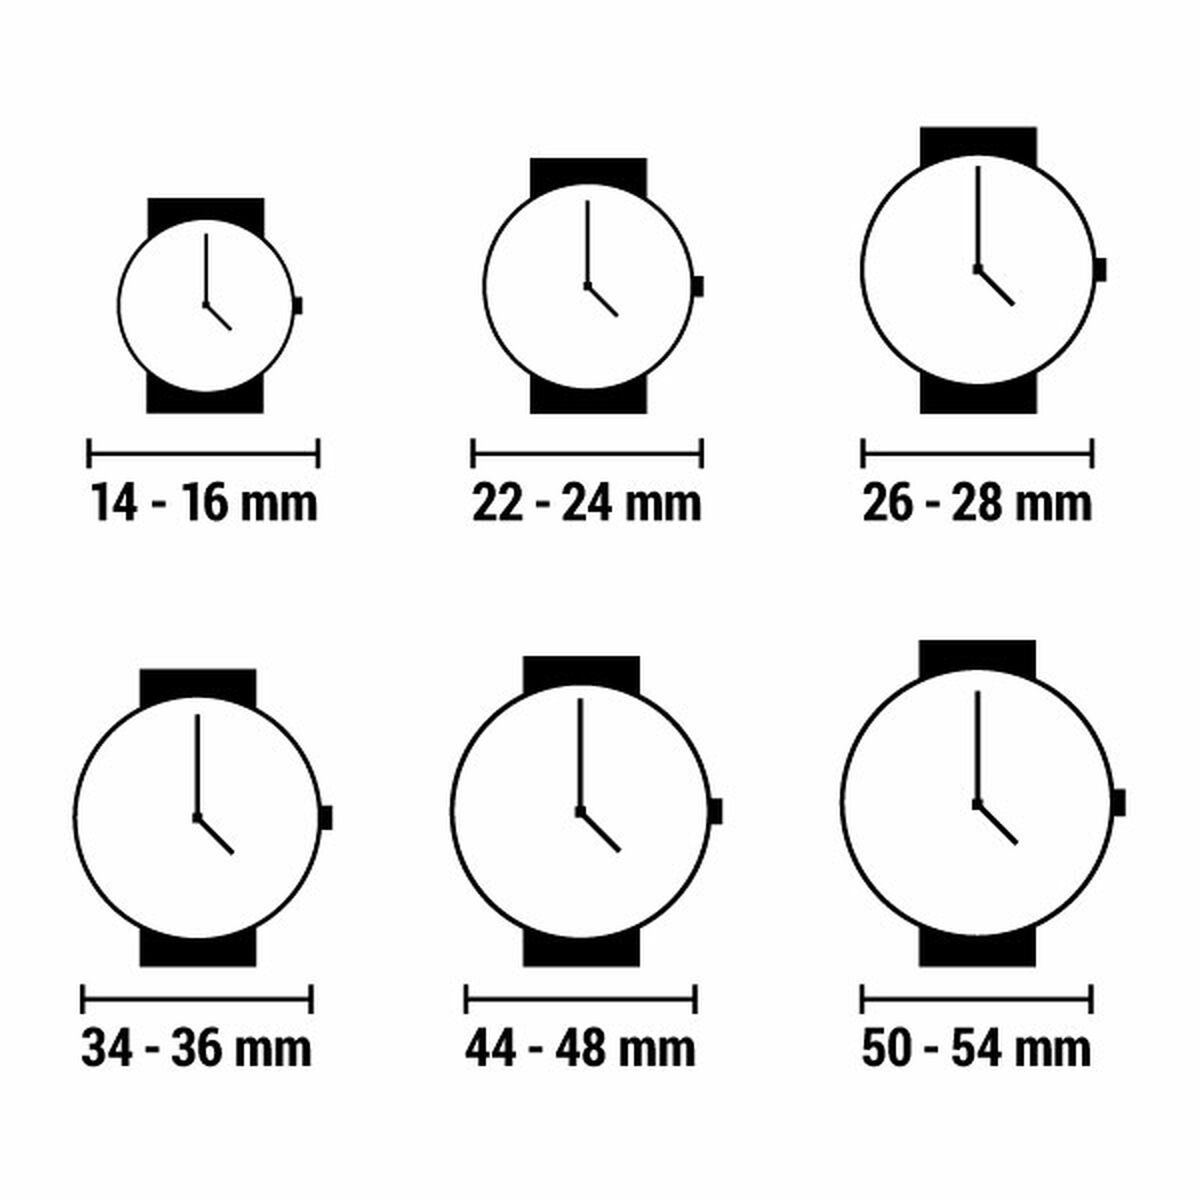 Horloge Dames Watx COWA1155-RWA1557 (Ø 38 mm)